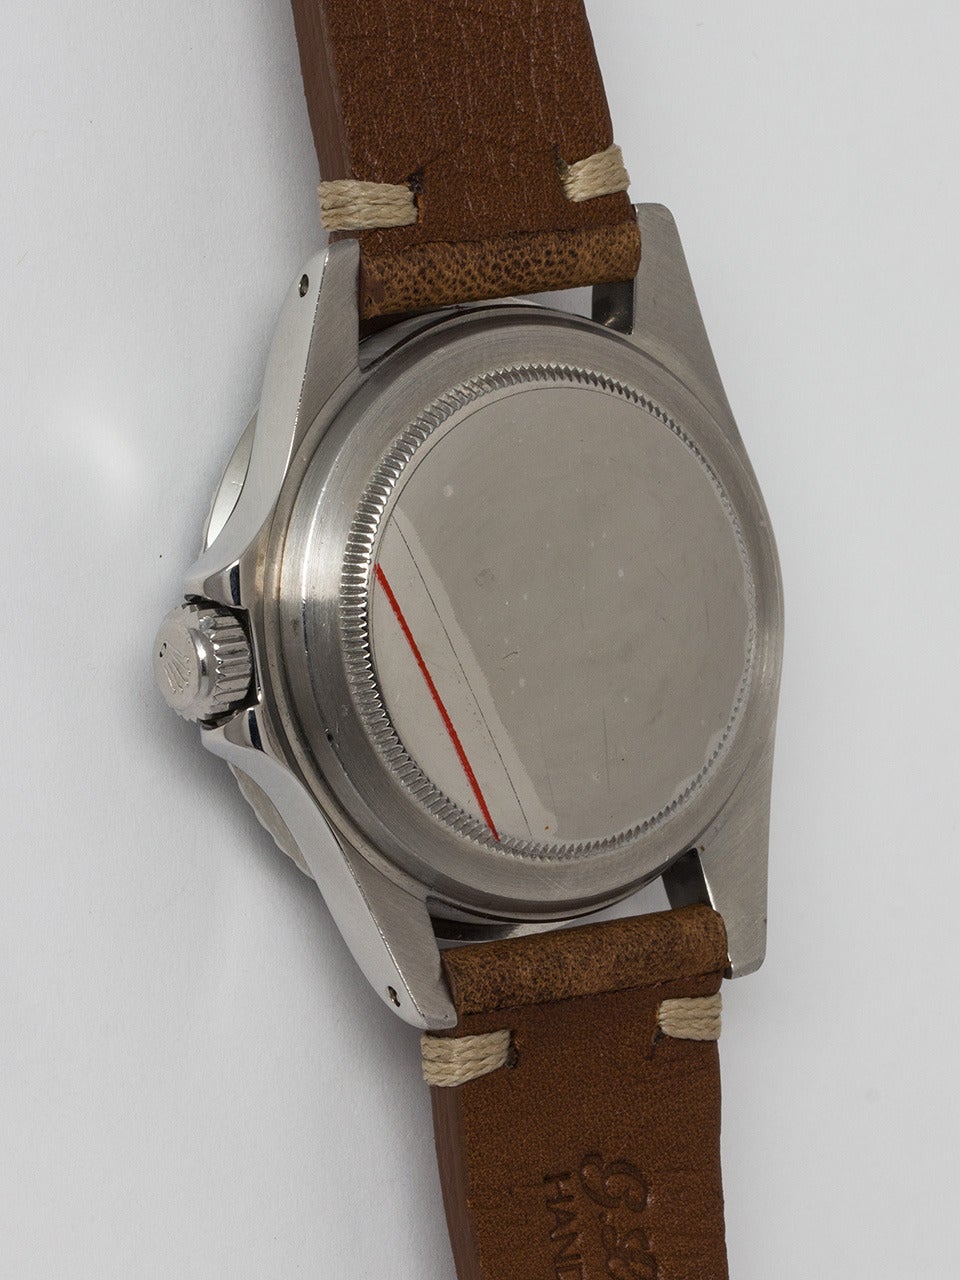 Men's Rolex Stainless Steel Oyster Perpetual Submariner Wristwatch Ref 5513